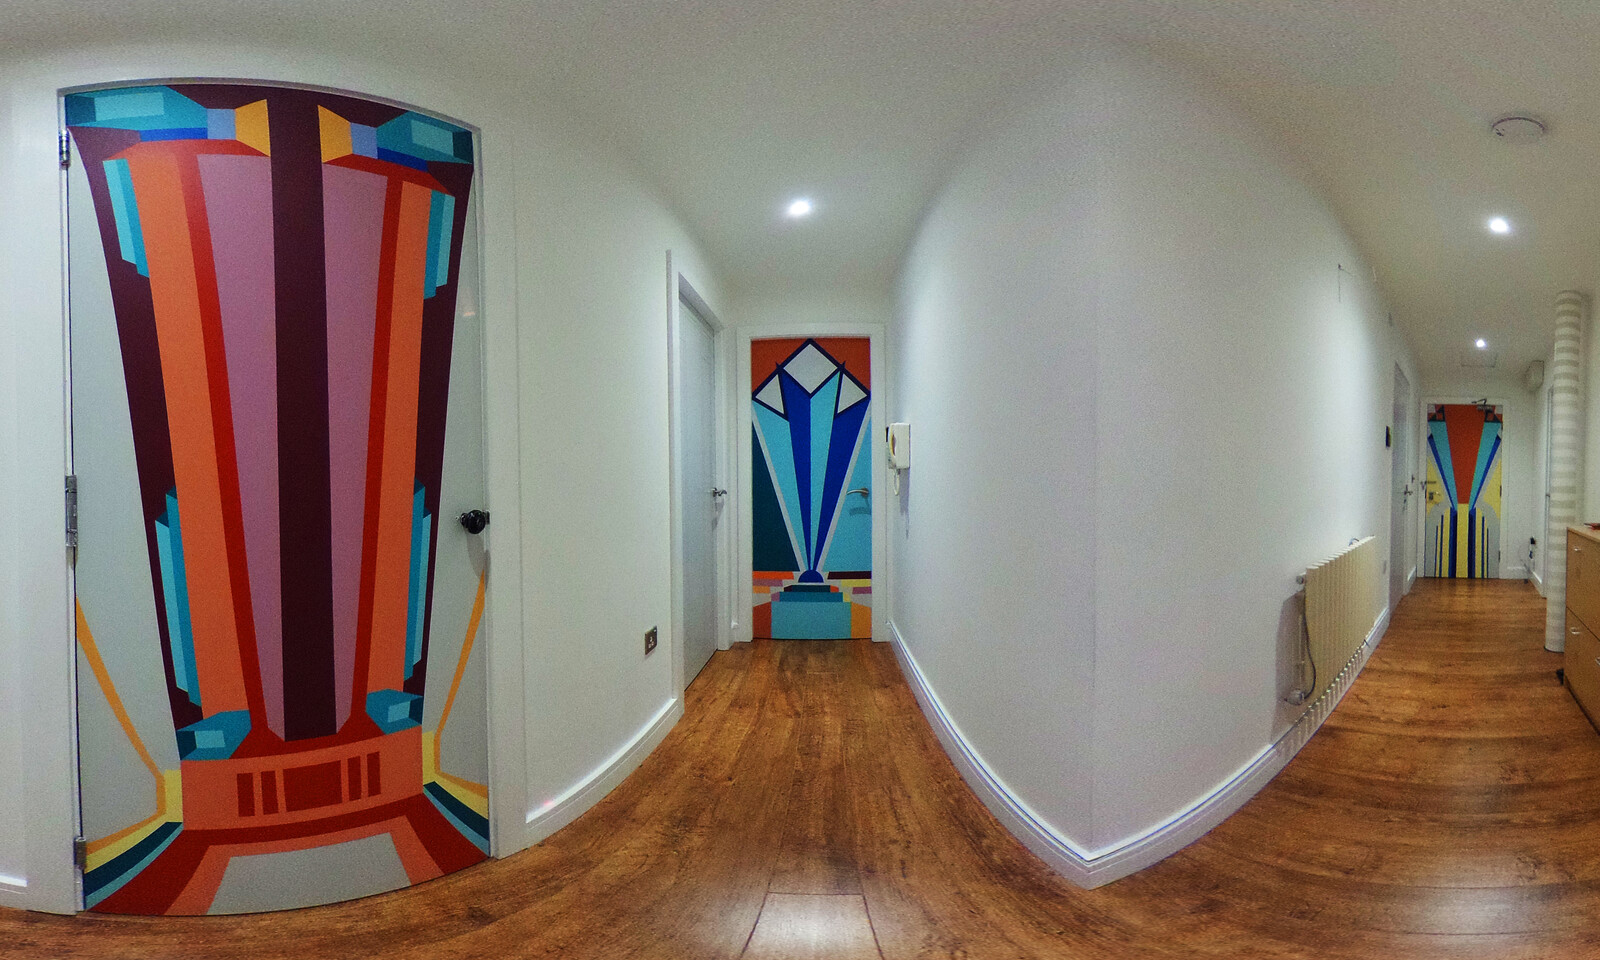 The hallway doors of an apartment